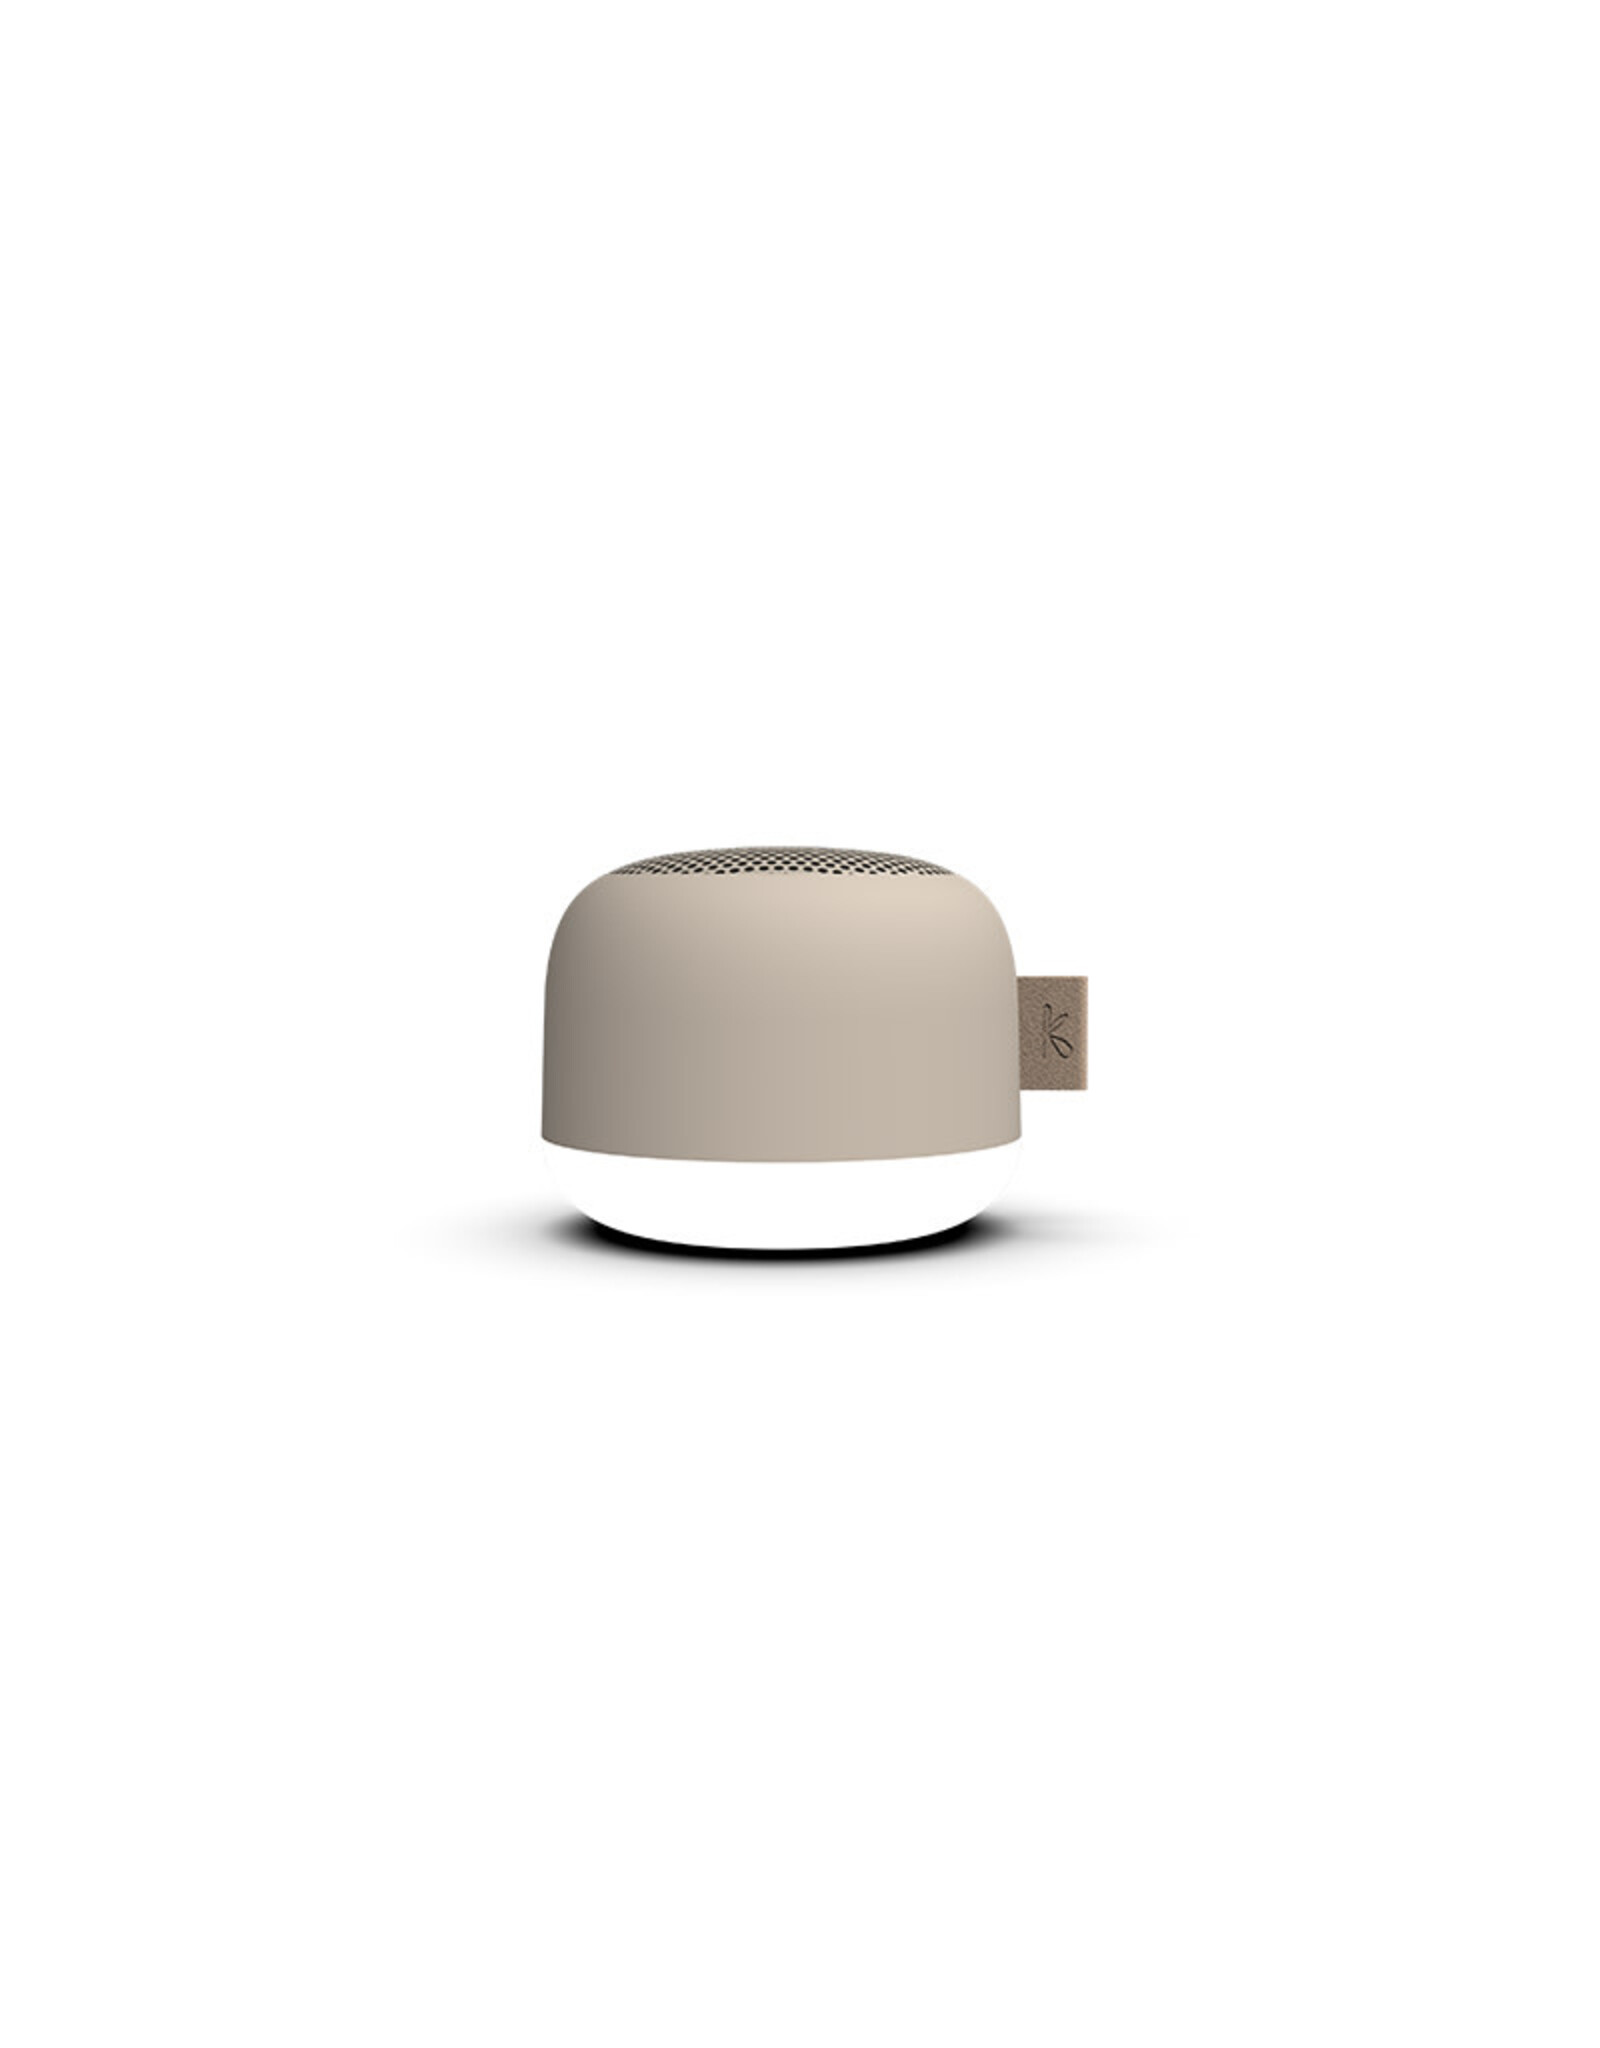 Kreafunk aLight Bluetooth Speaker with Light - Ivory Sand